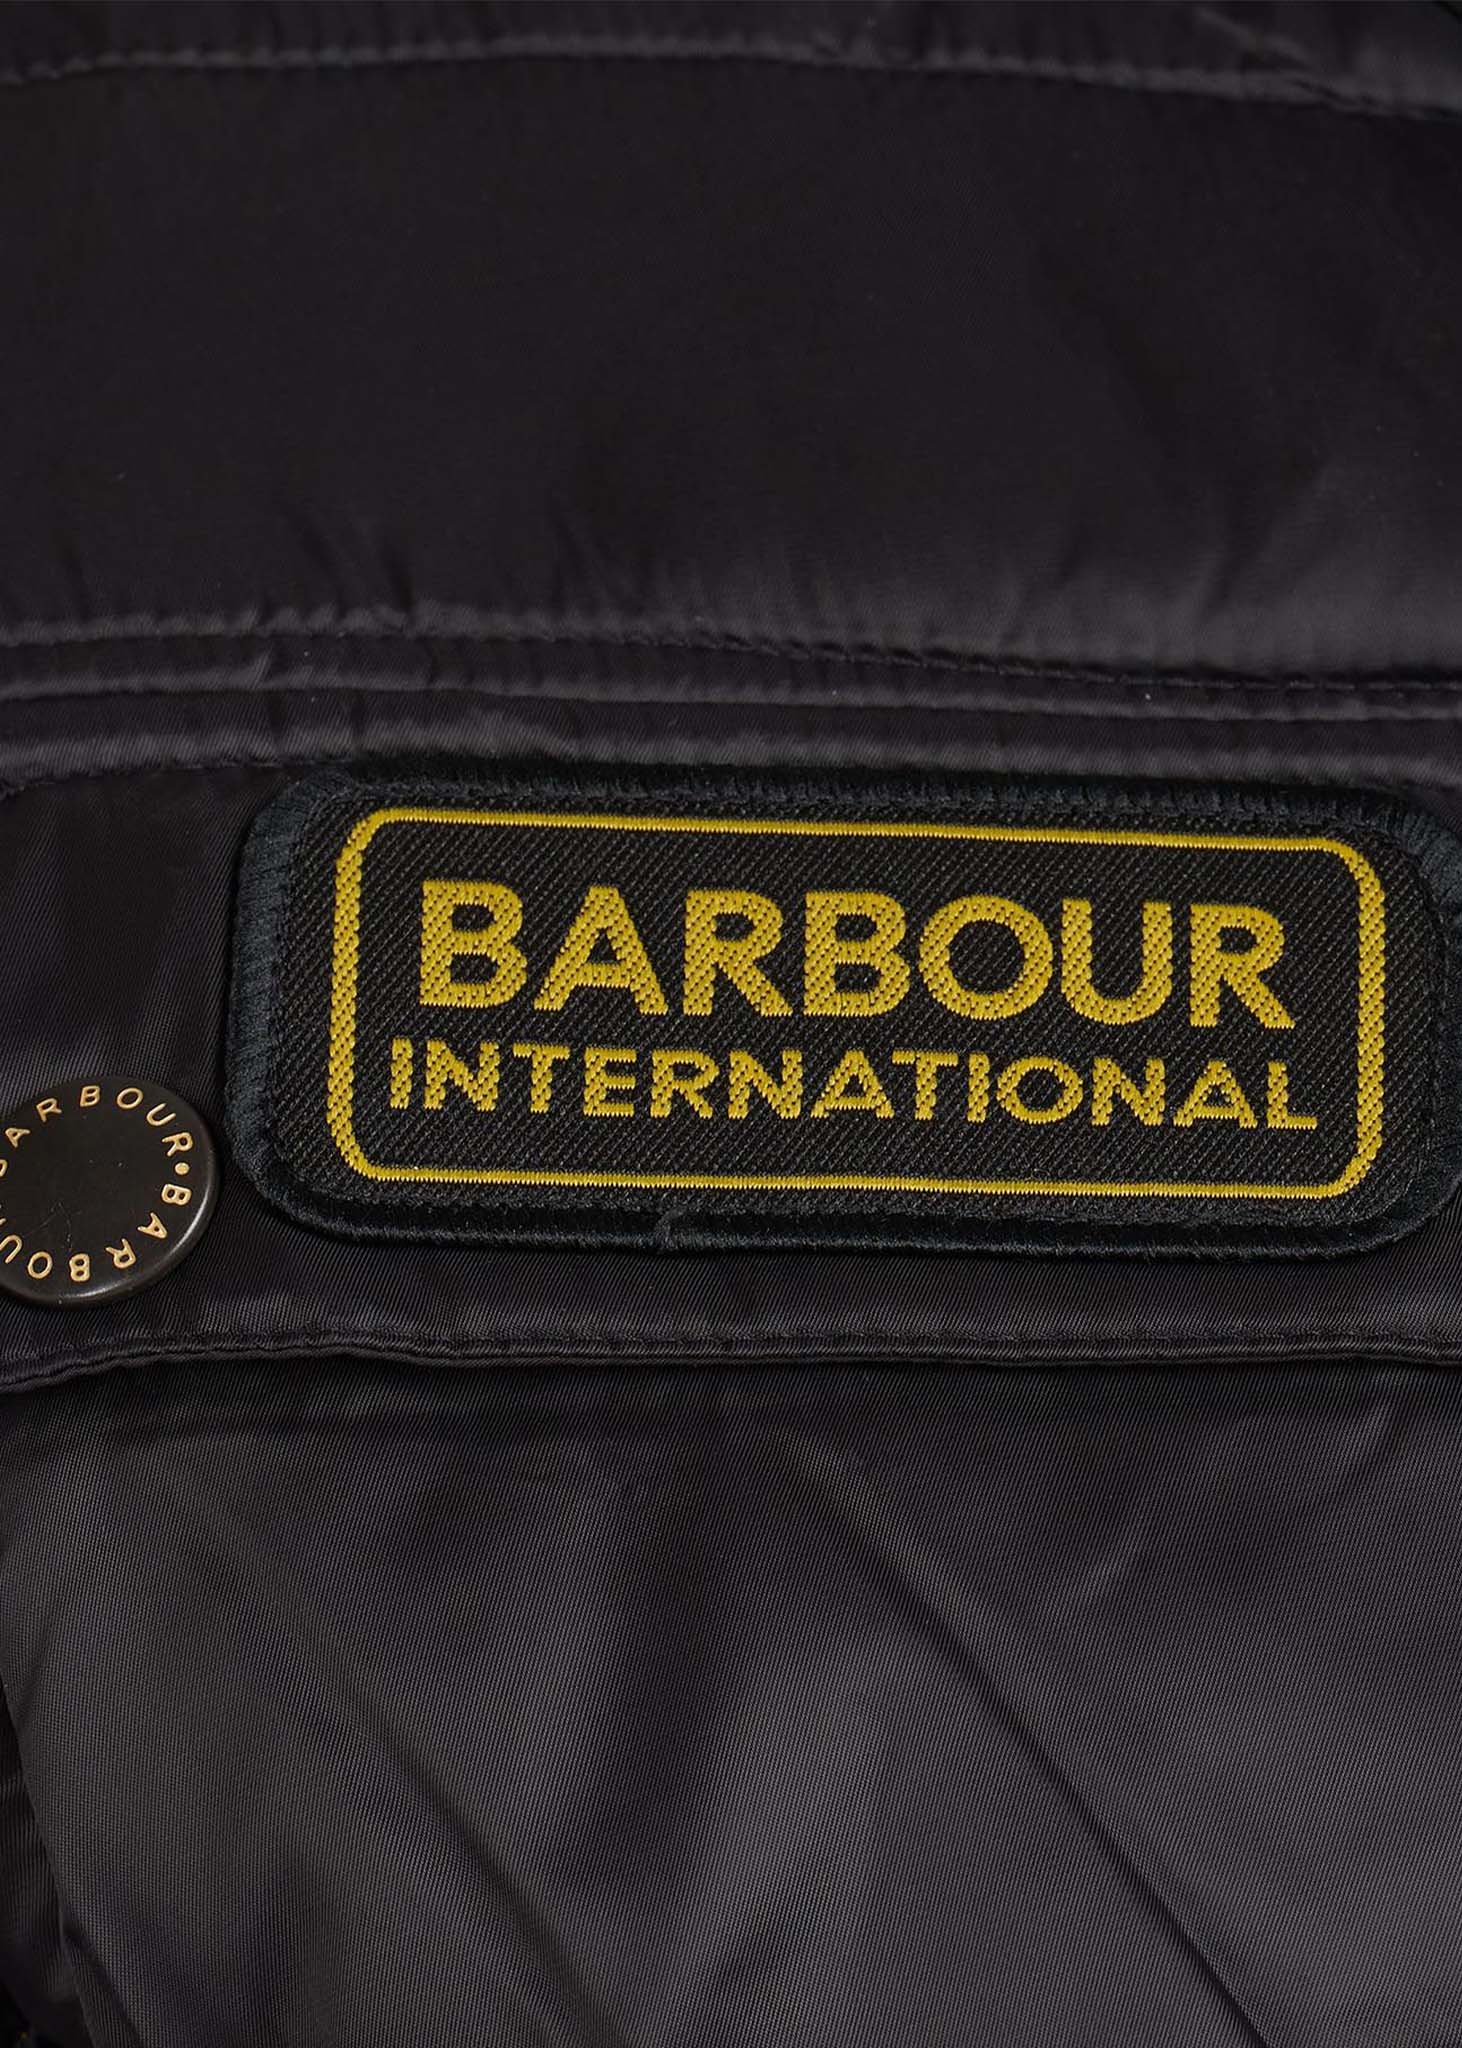 barbour international jas zwart